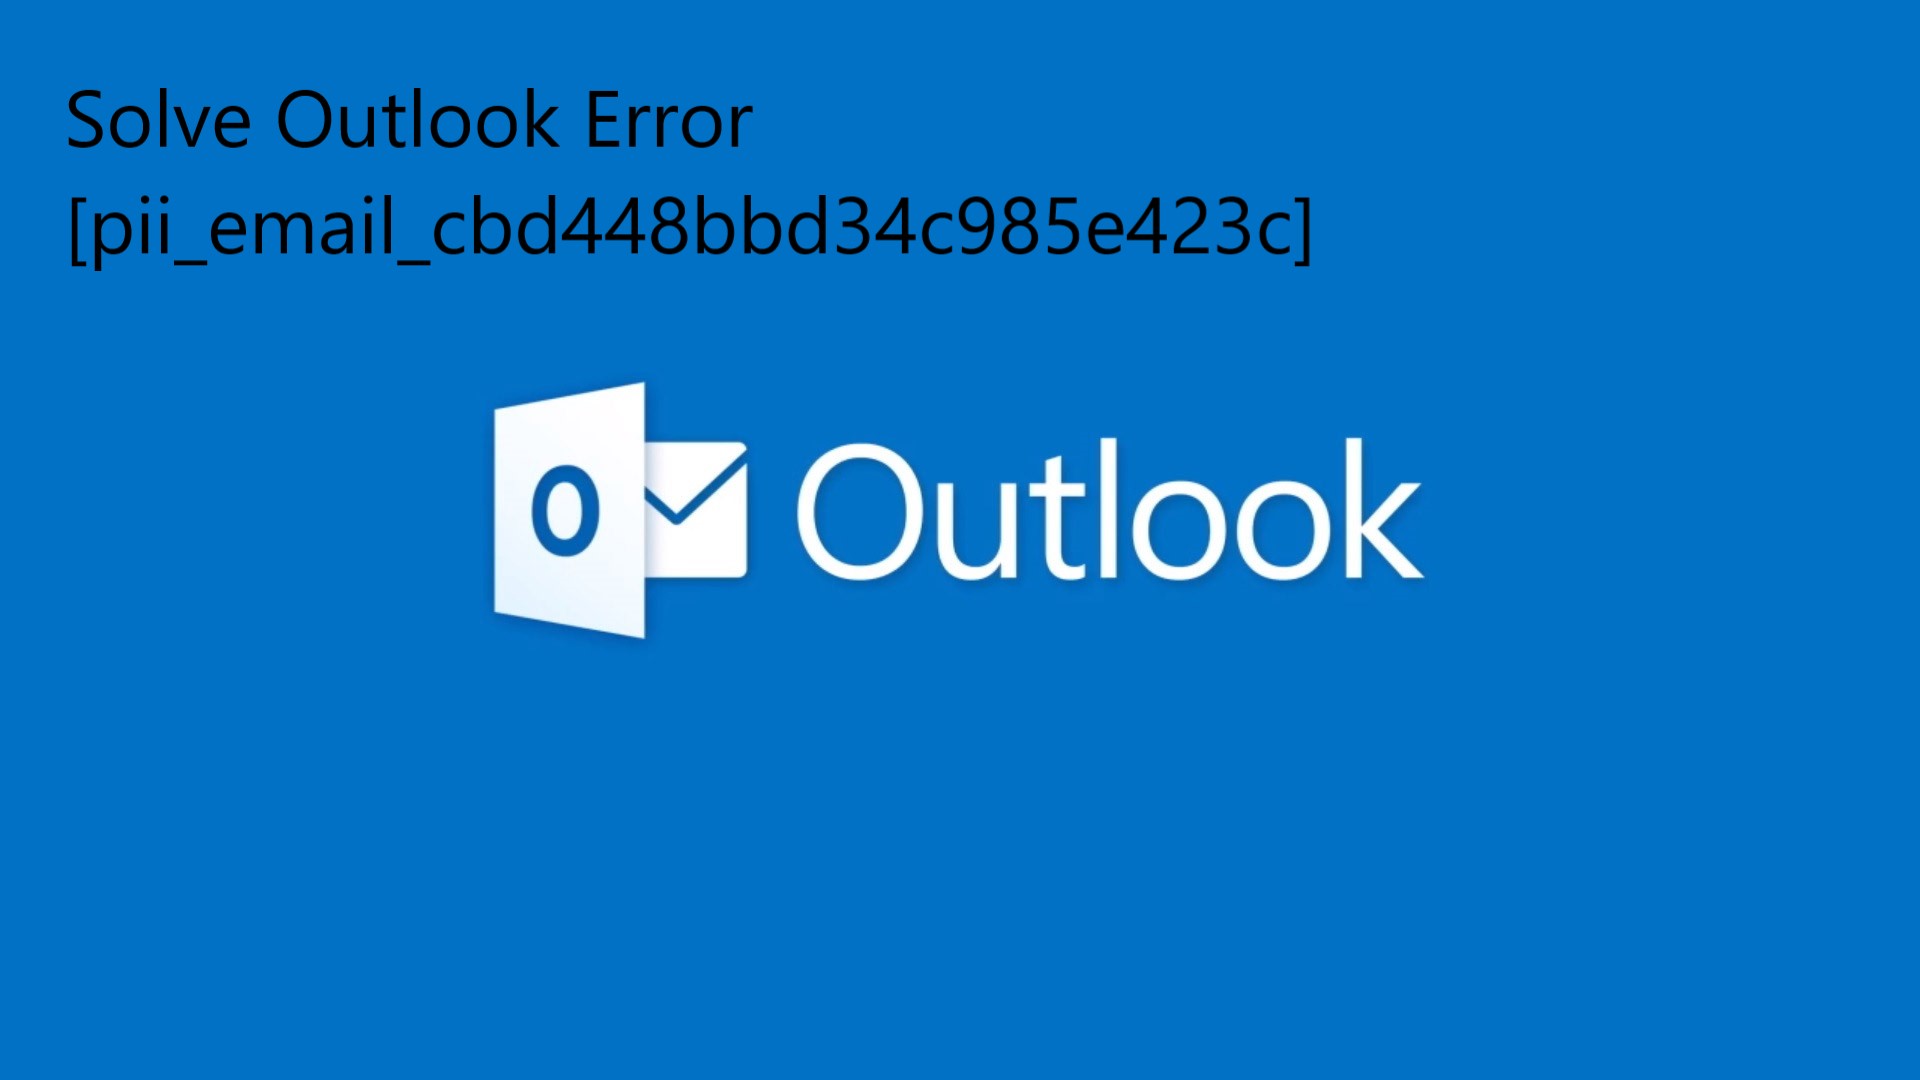 Solve Outlook Error [pii_email_cbd448bbd34c985e423c]